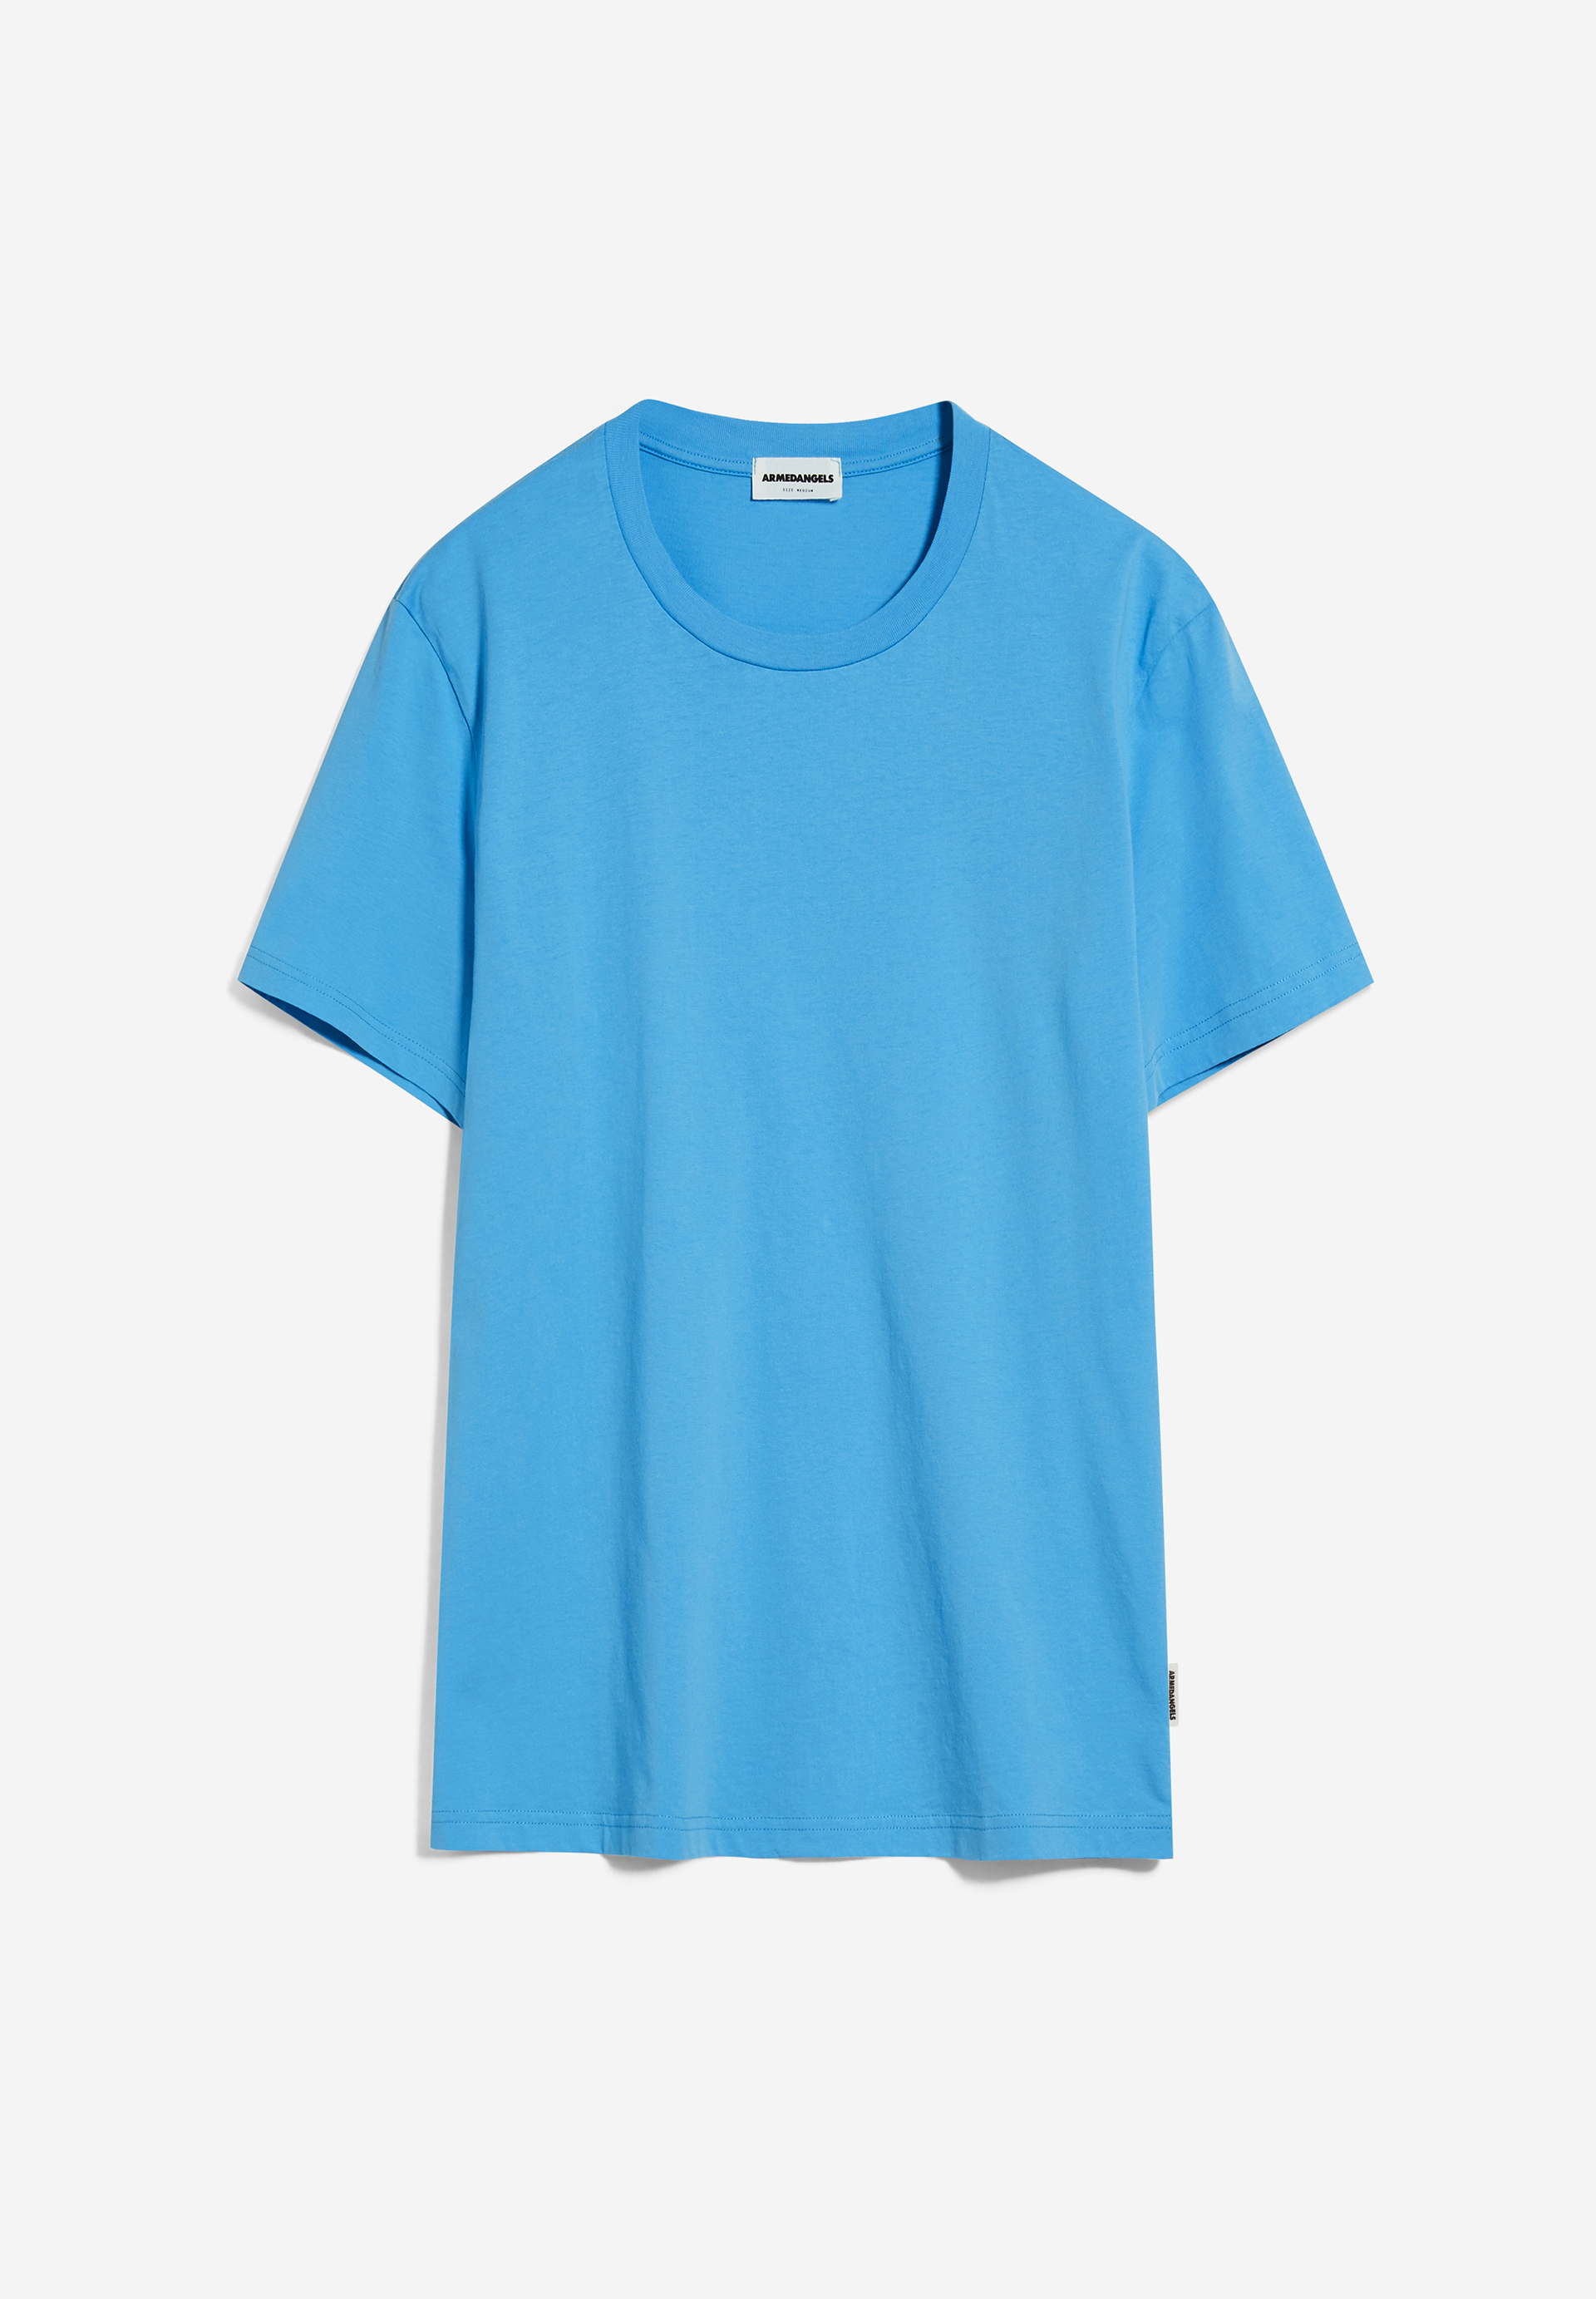 JAAMES T-Shirt Regular Fit made of Organic Cotton